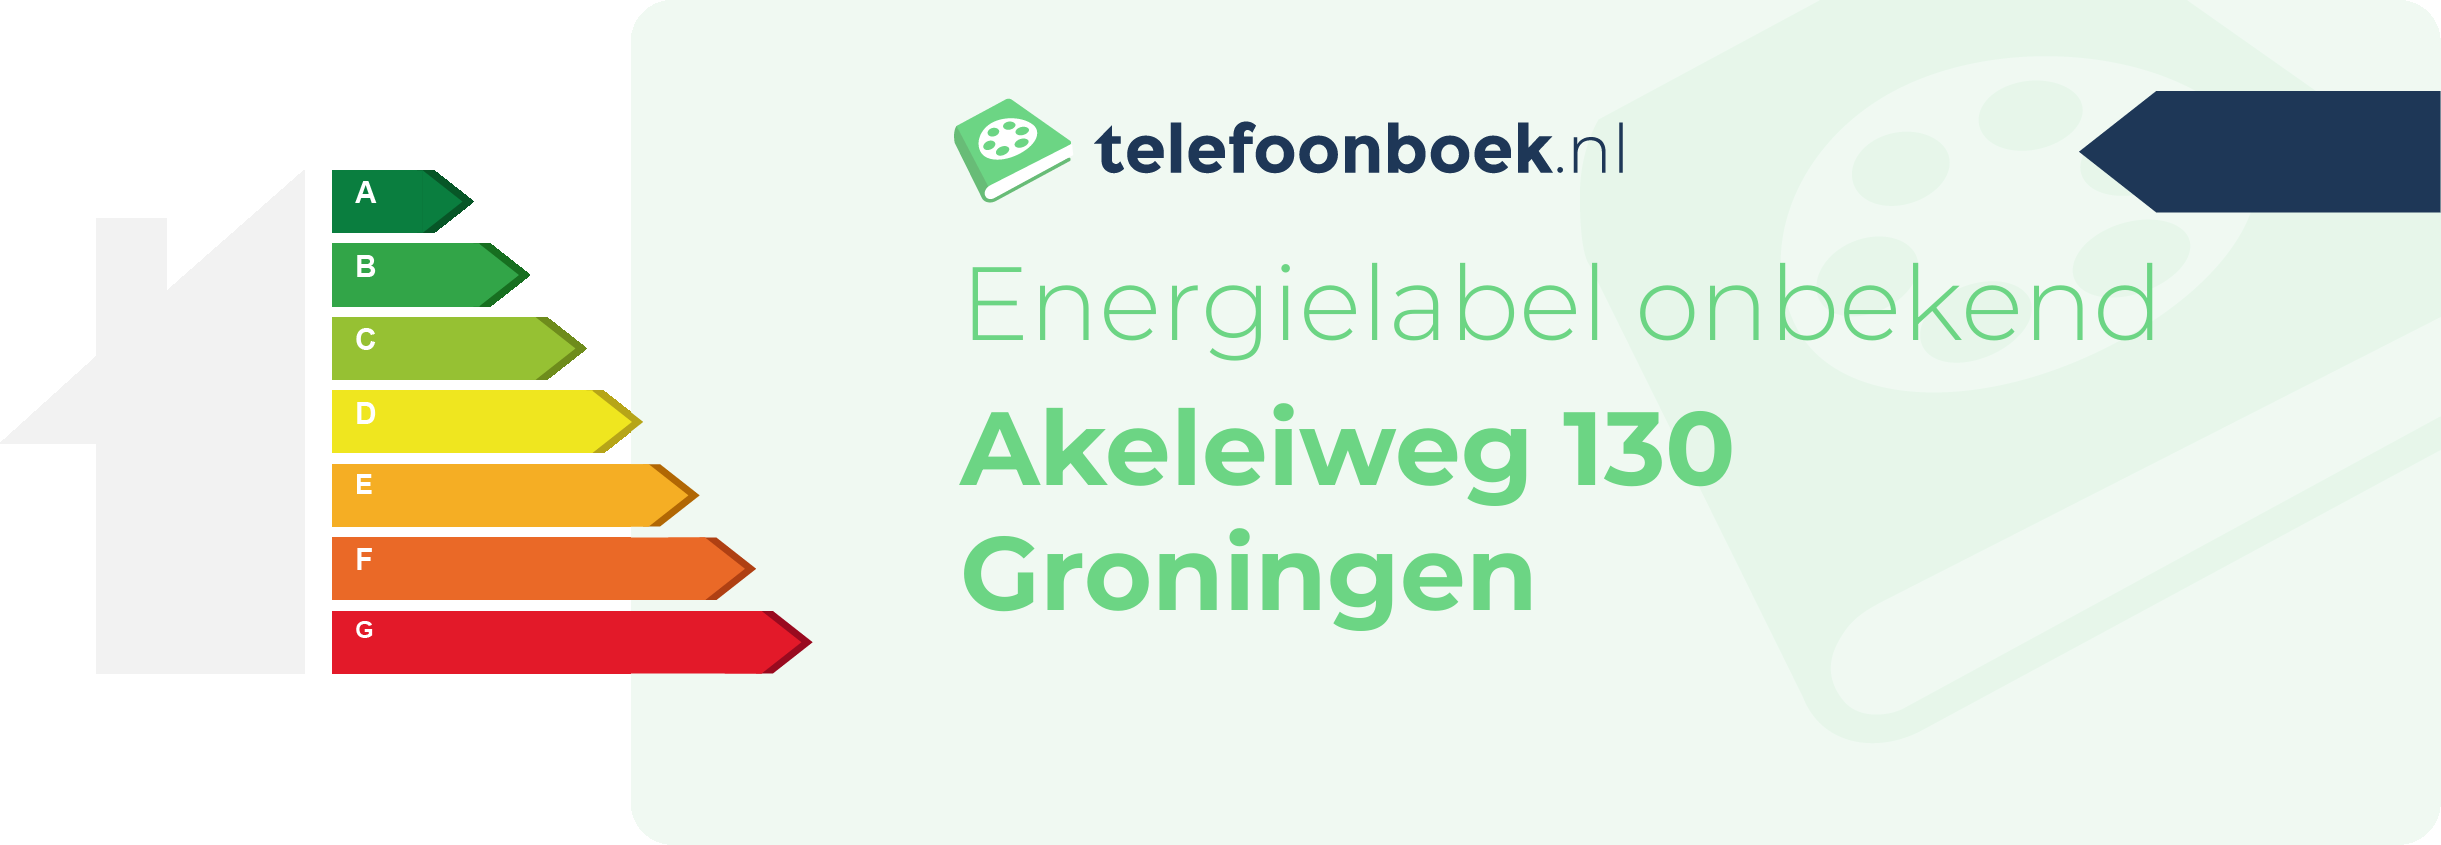 Energielabel Akeleiweg 130 Groningen